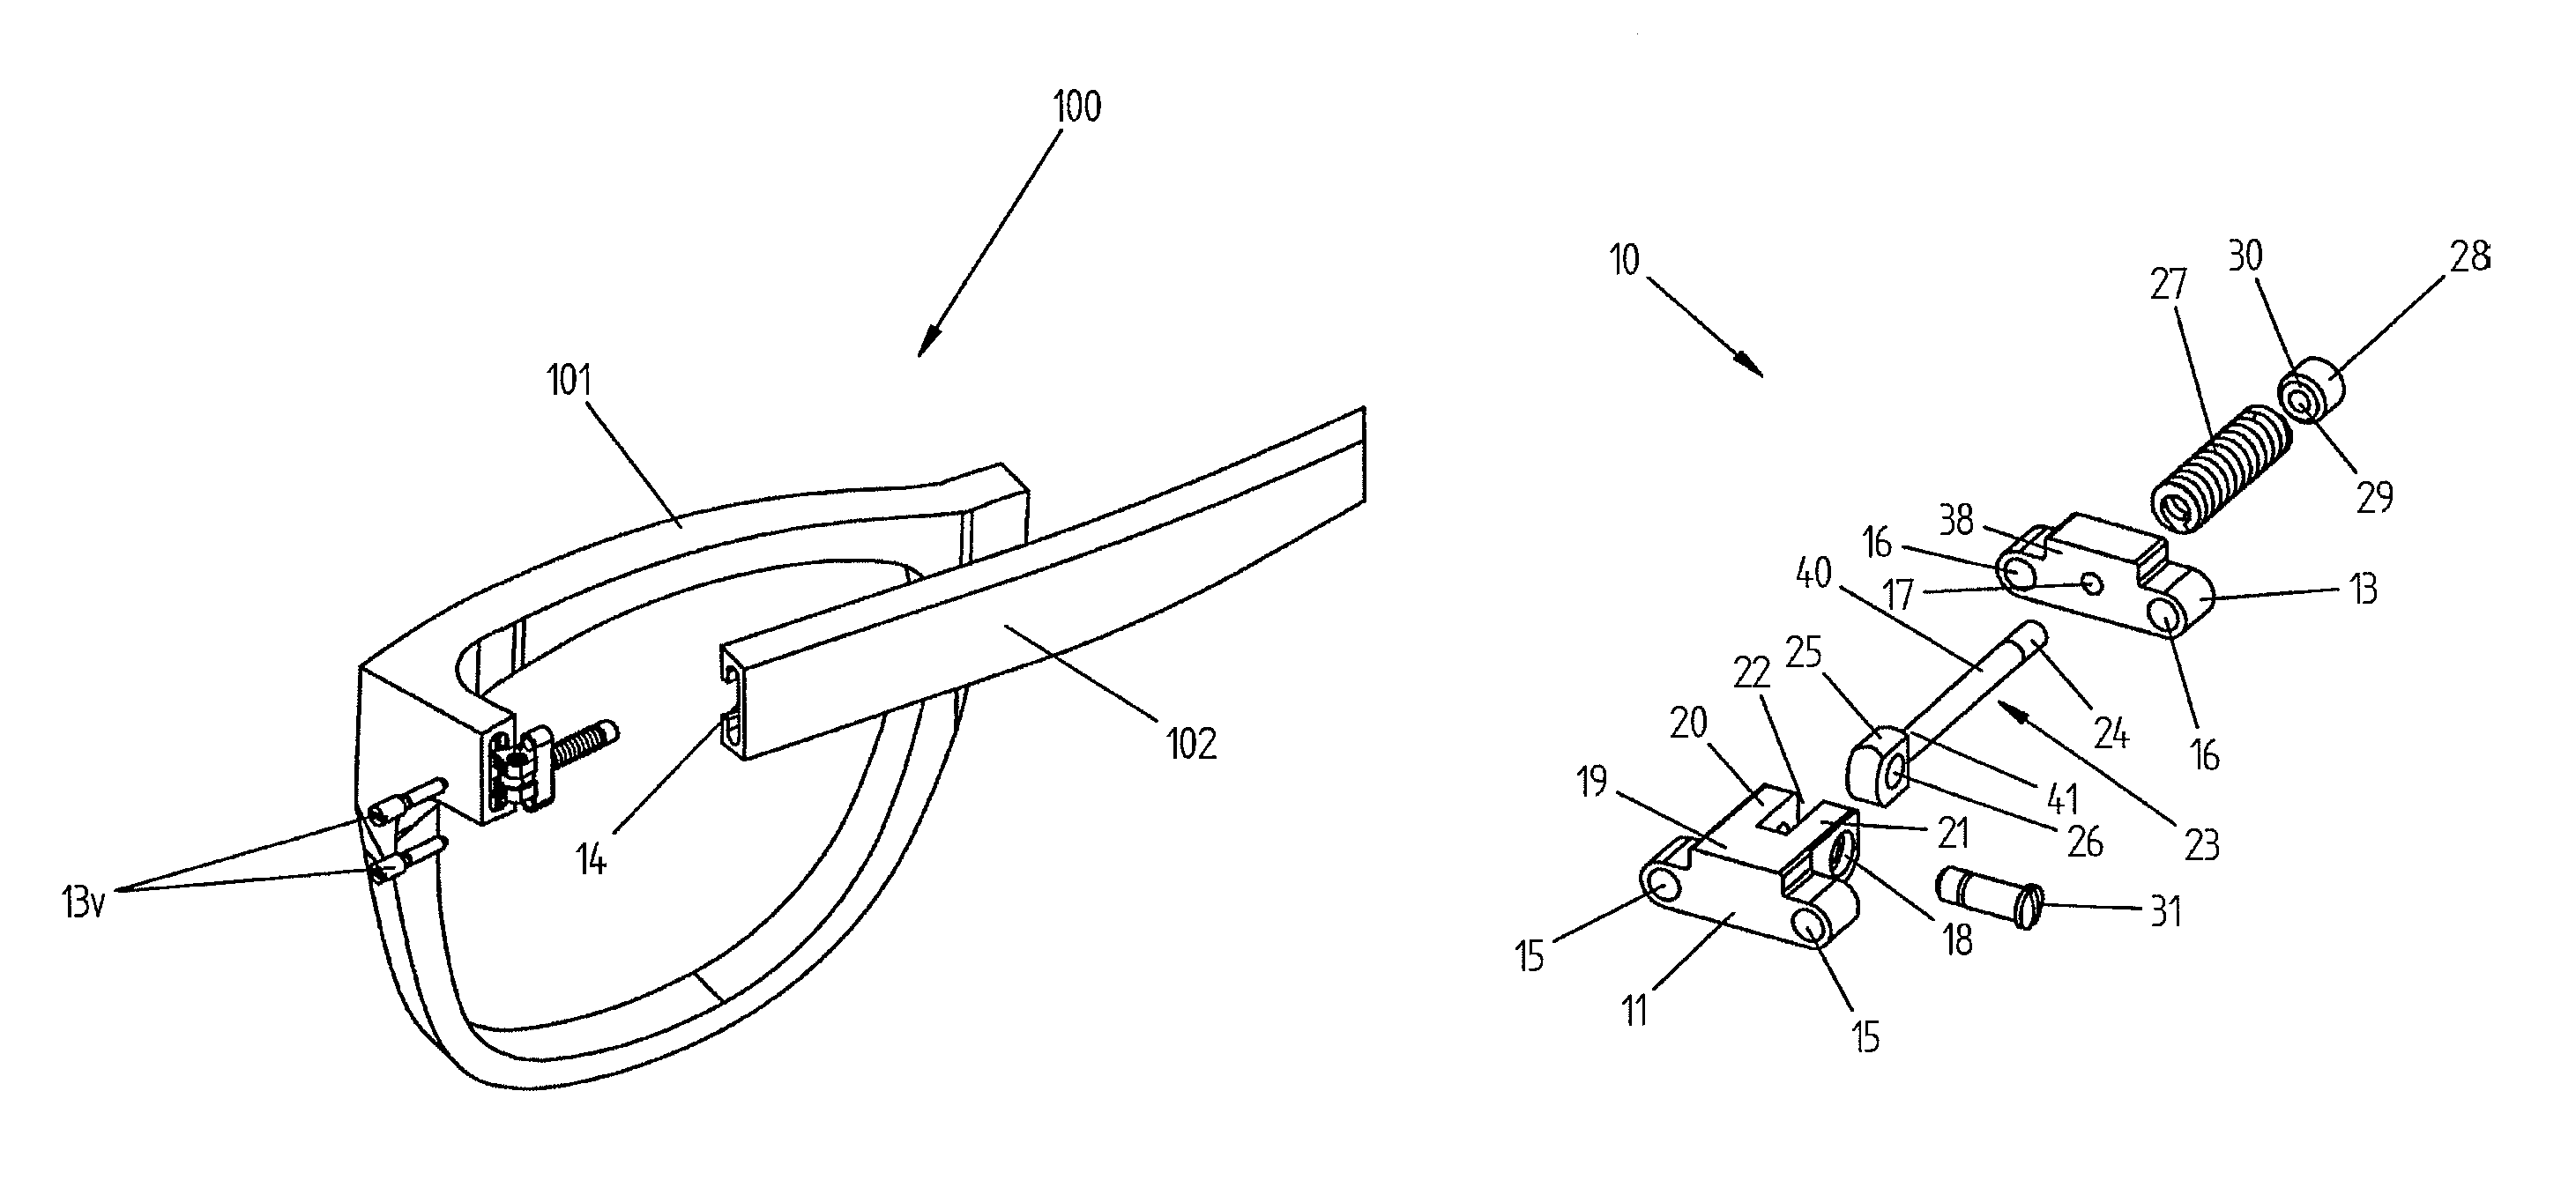 Miniaturized elastic hinge, in particular for eyeglasses